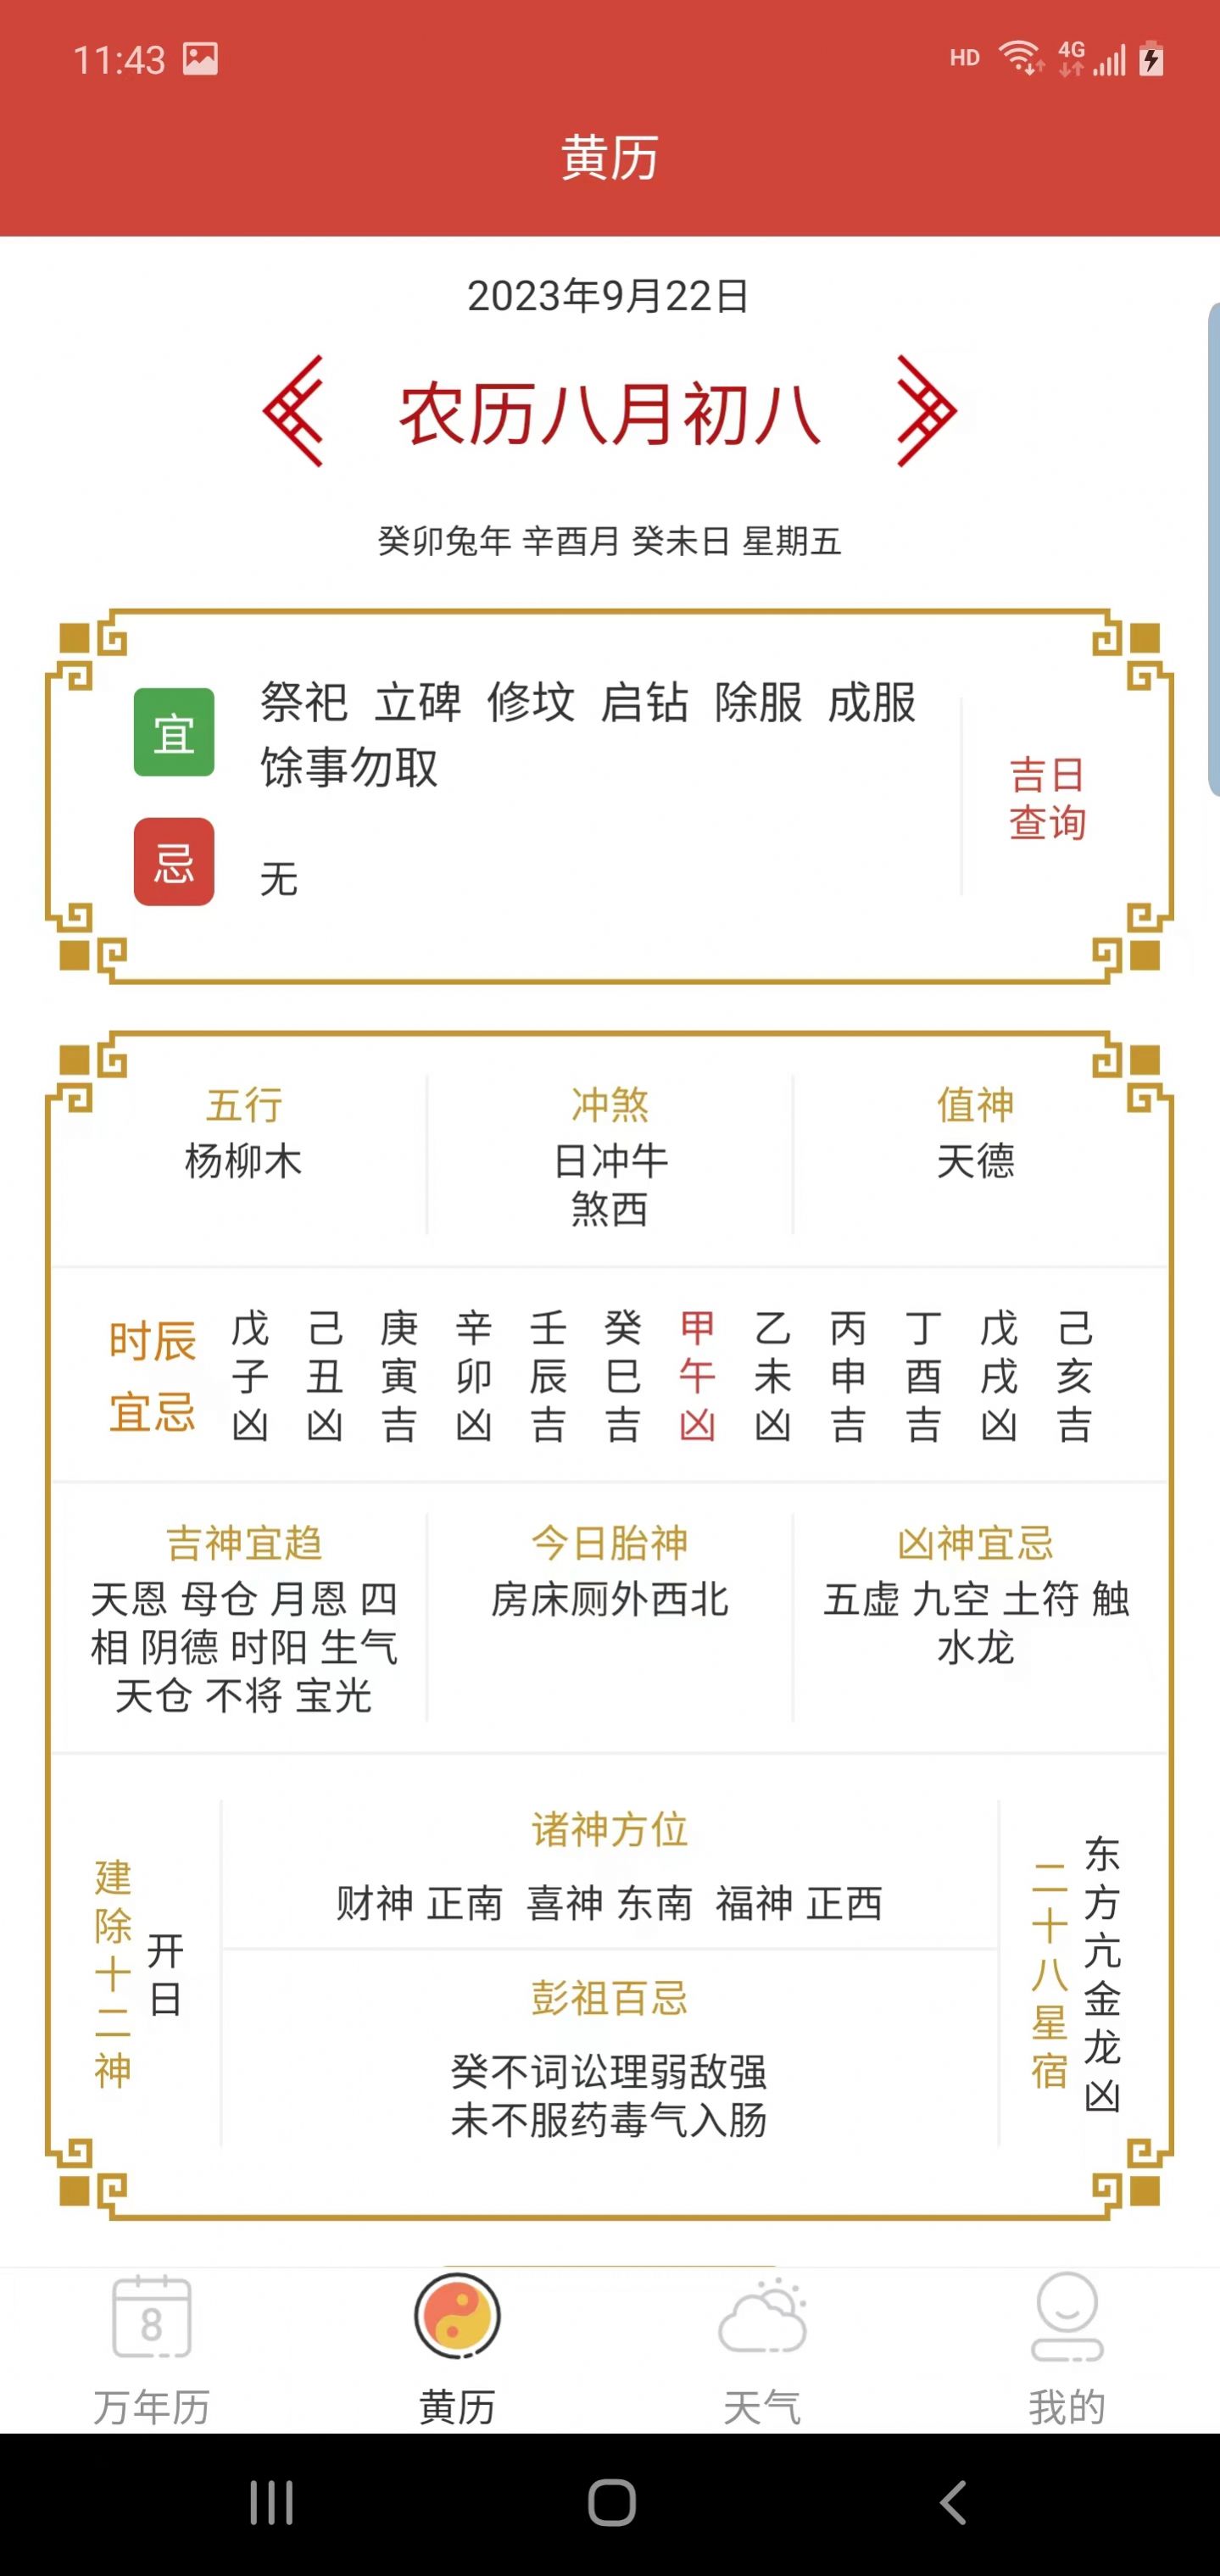 晶讯万年历app screenshot 3